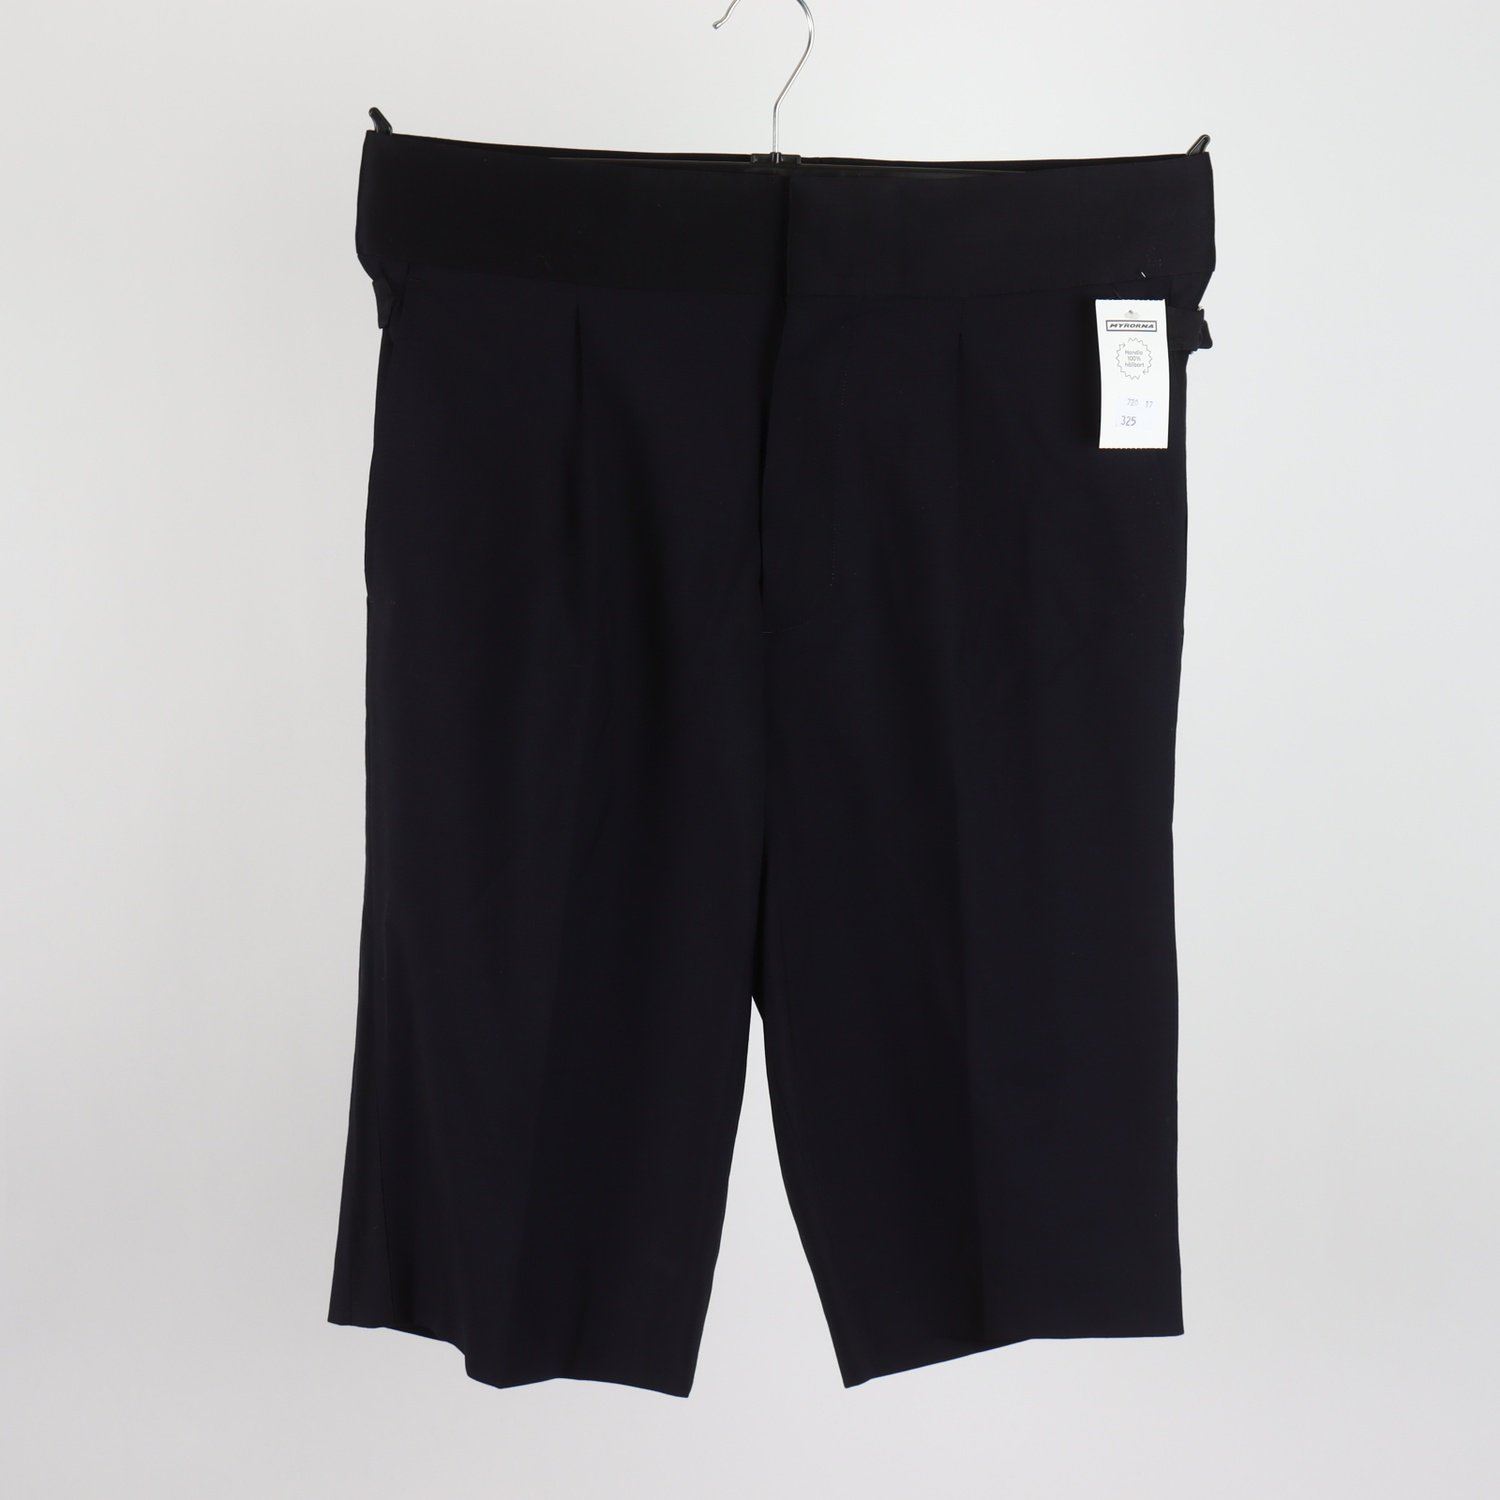 Shorts, Toga Archives X H&M, blå, 100 % ull, stl. 48